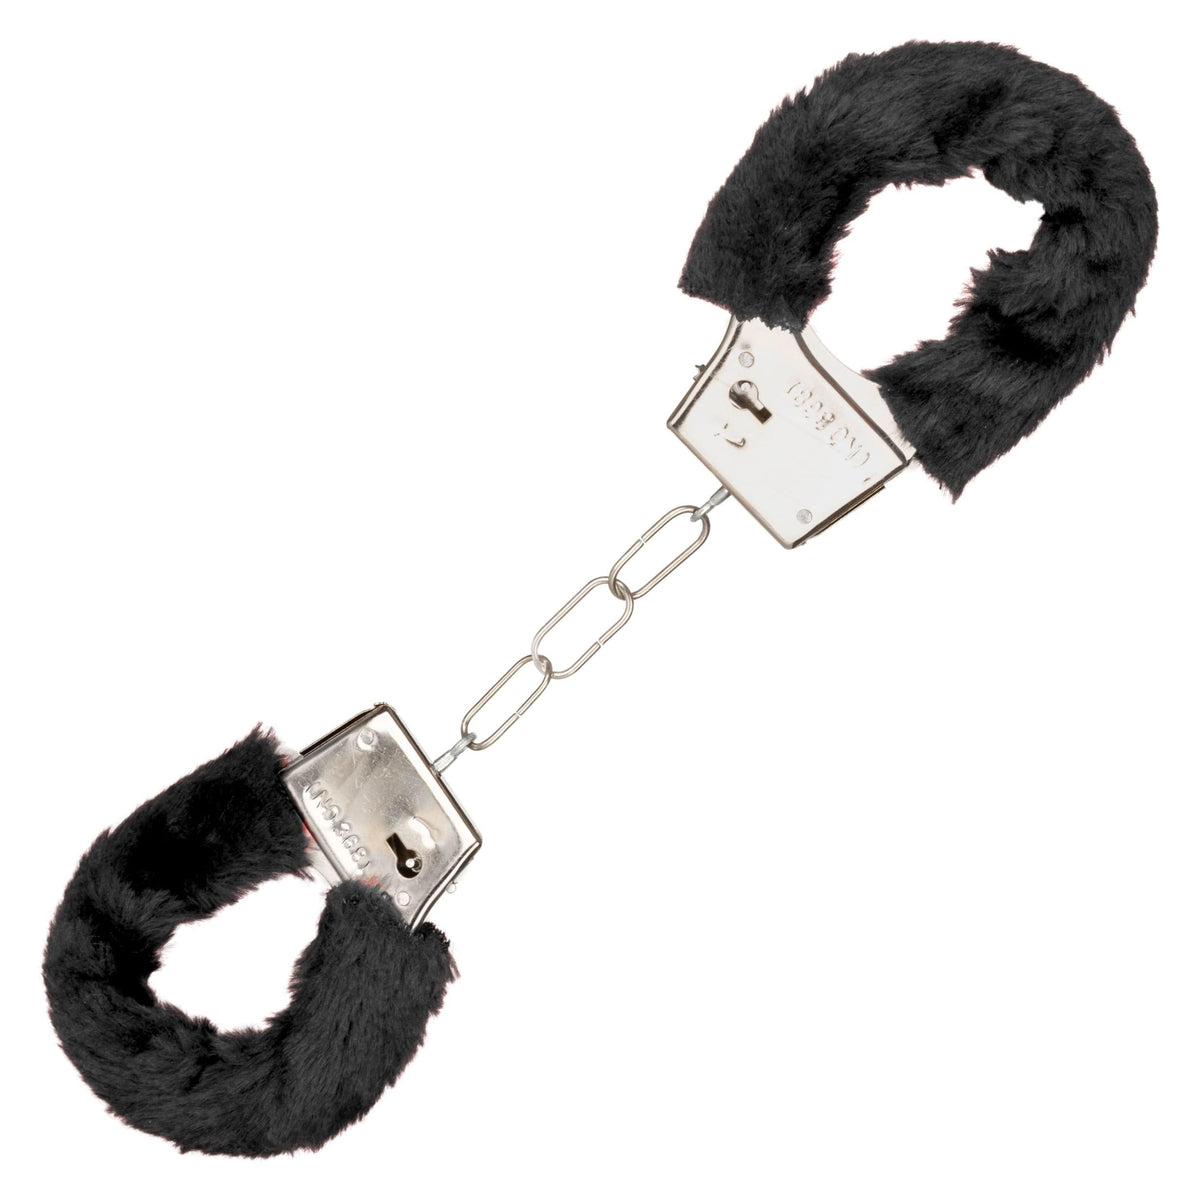 playful furry cuffs black